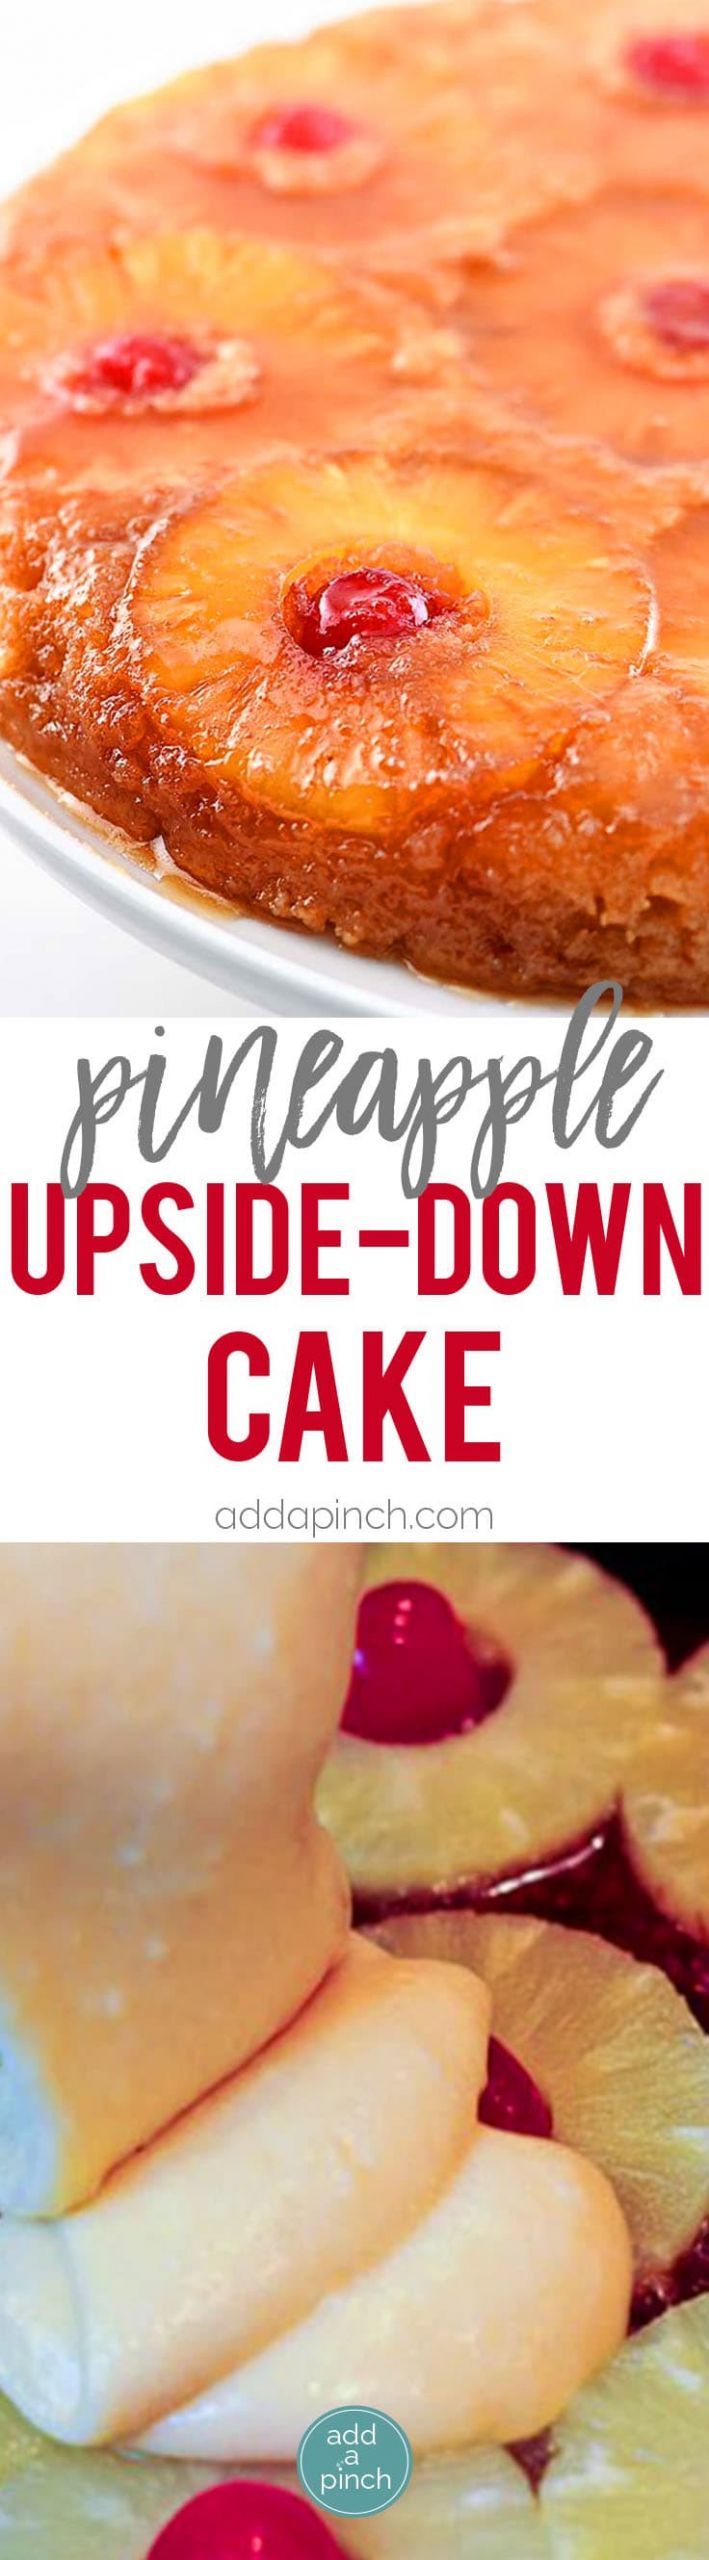 Southern Pineapple Upside Down Cake
 Pineapple Upside Down Cake Recipe Add a Pinch